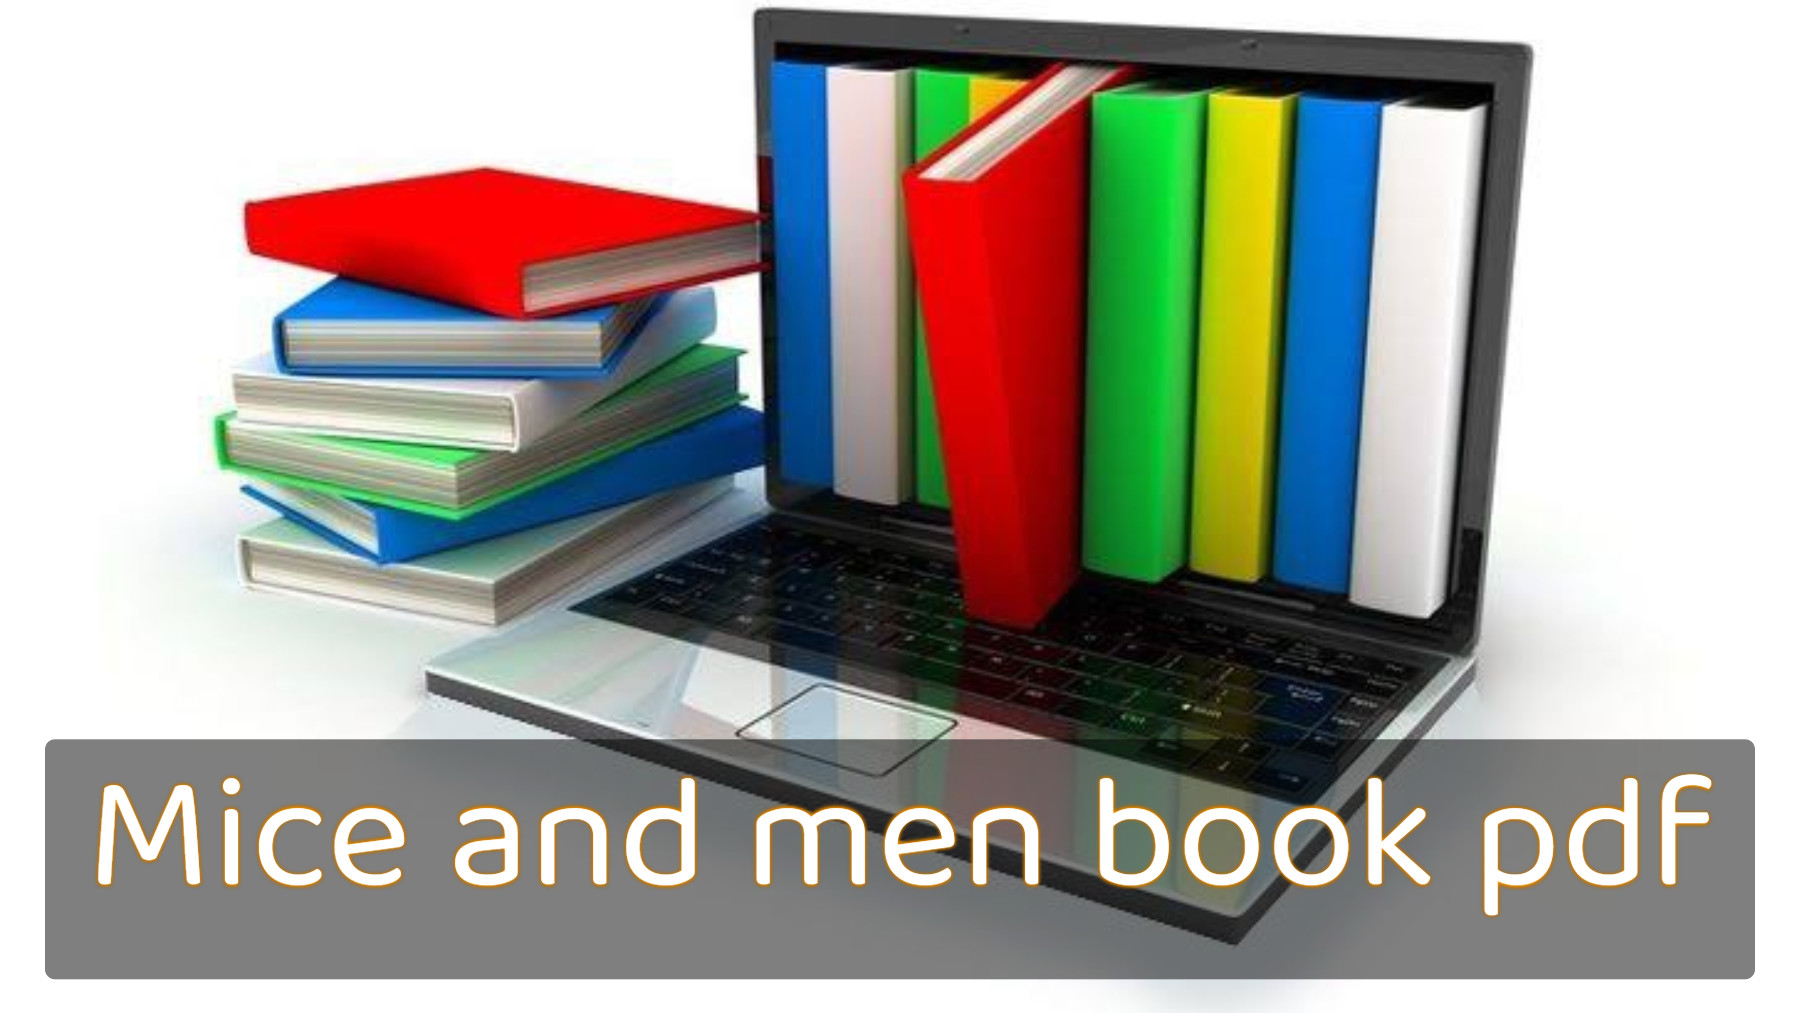 Mice and men book pdf, Mice and men pdf free download, Mice and men book pdf download, Mice and men pdf